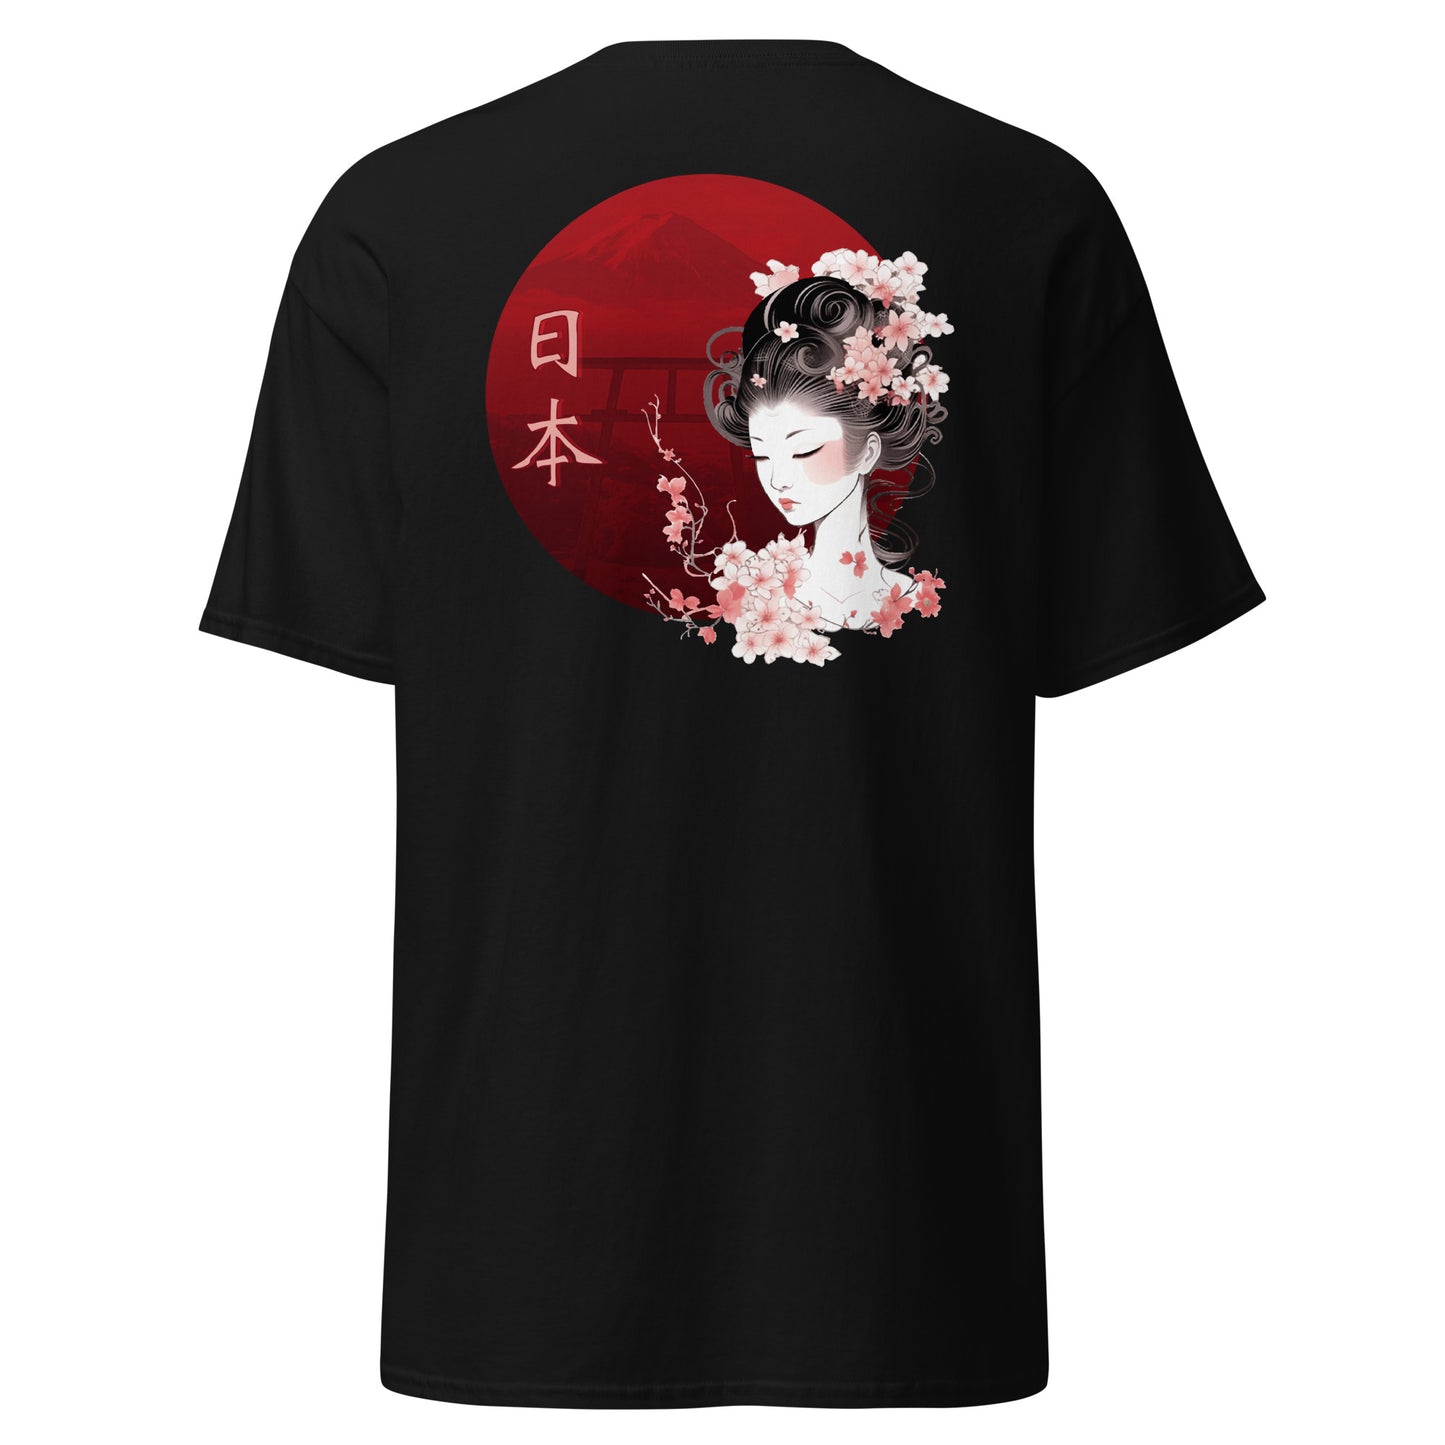 Black High Quality Tee - Back Design of Japanese Geisha Print